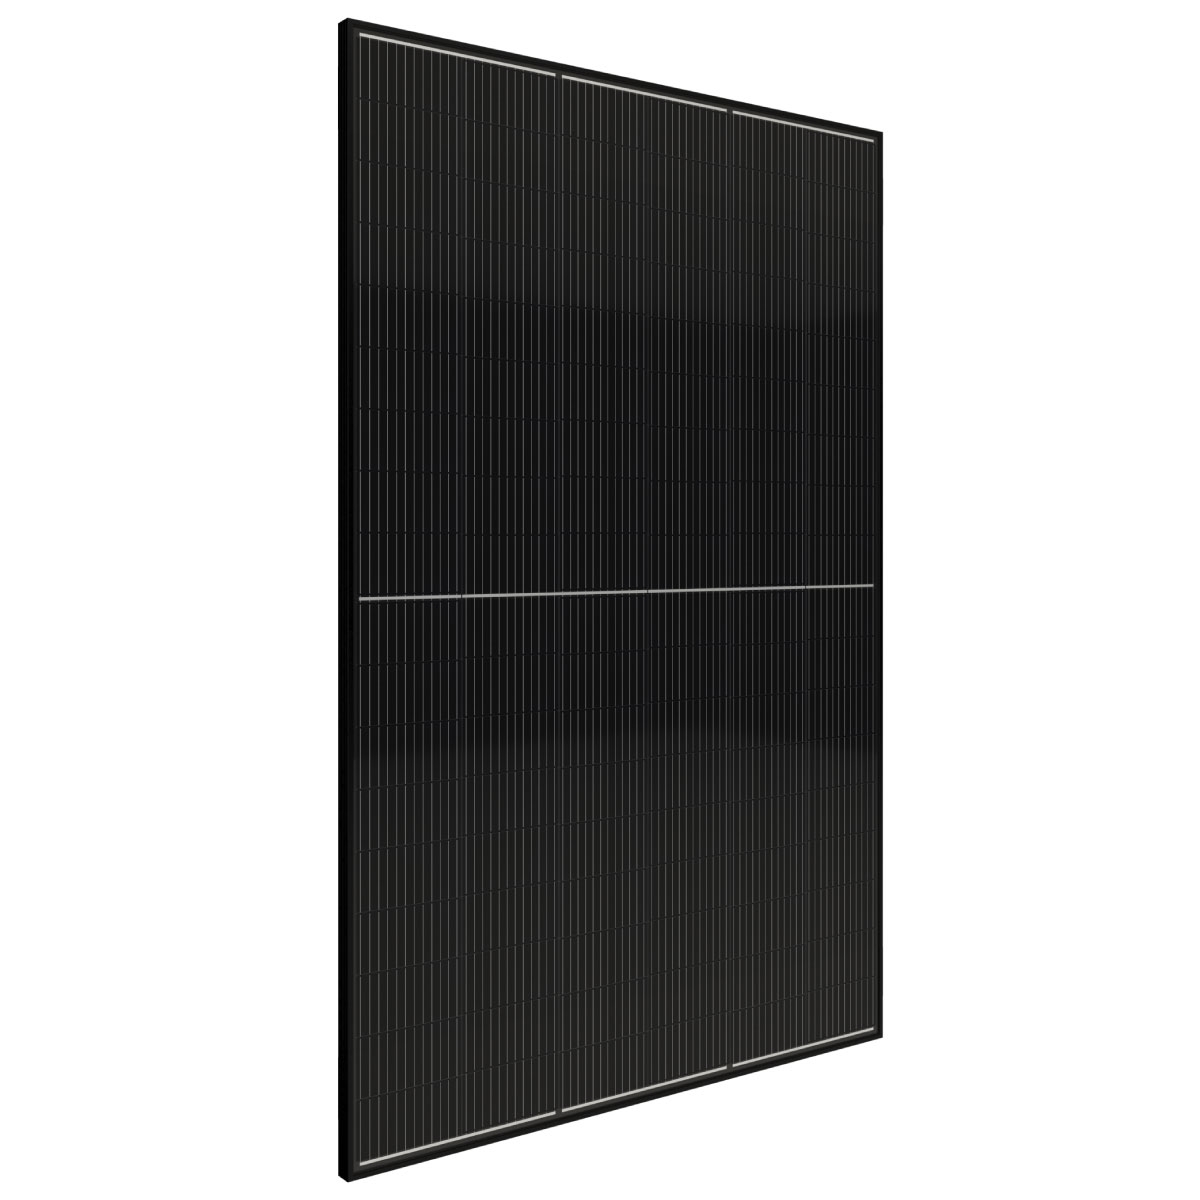 TommaTech 545Wp 108PM M12 Dark Series Solar Panel